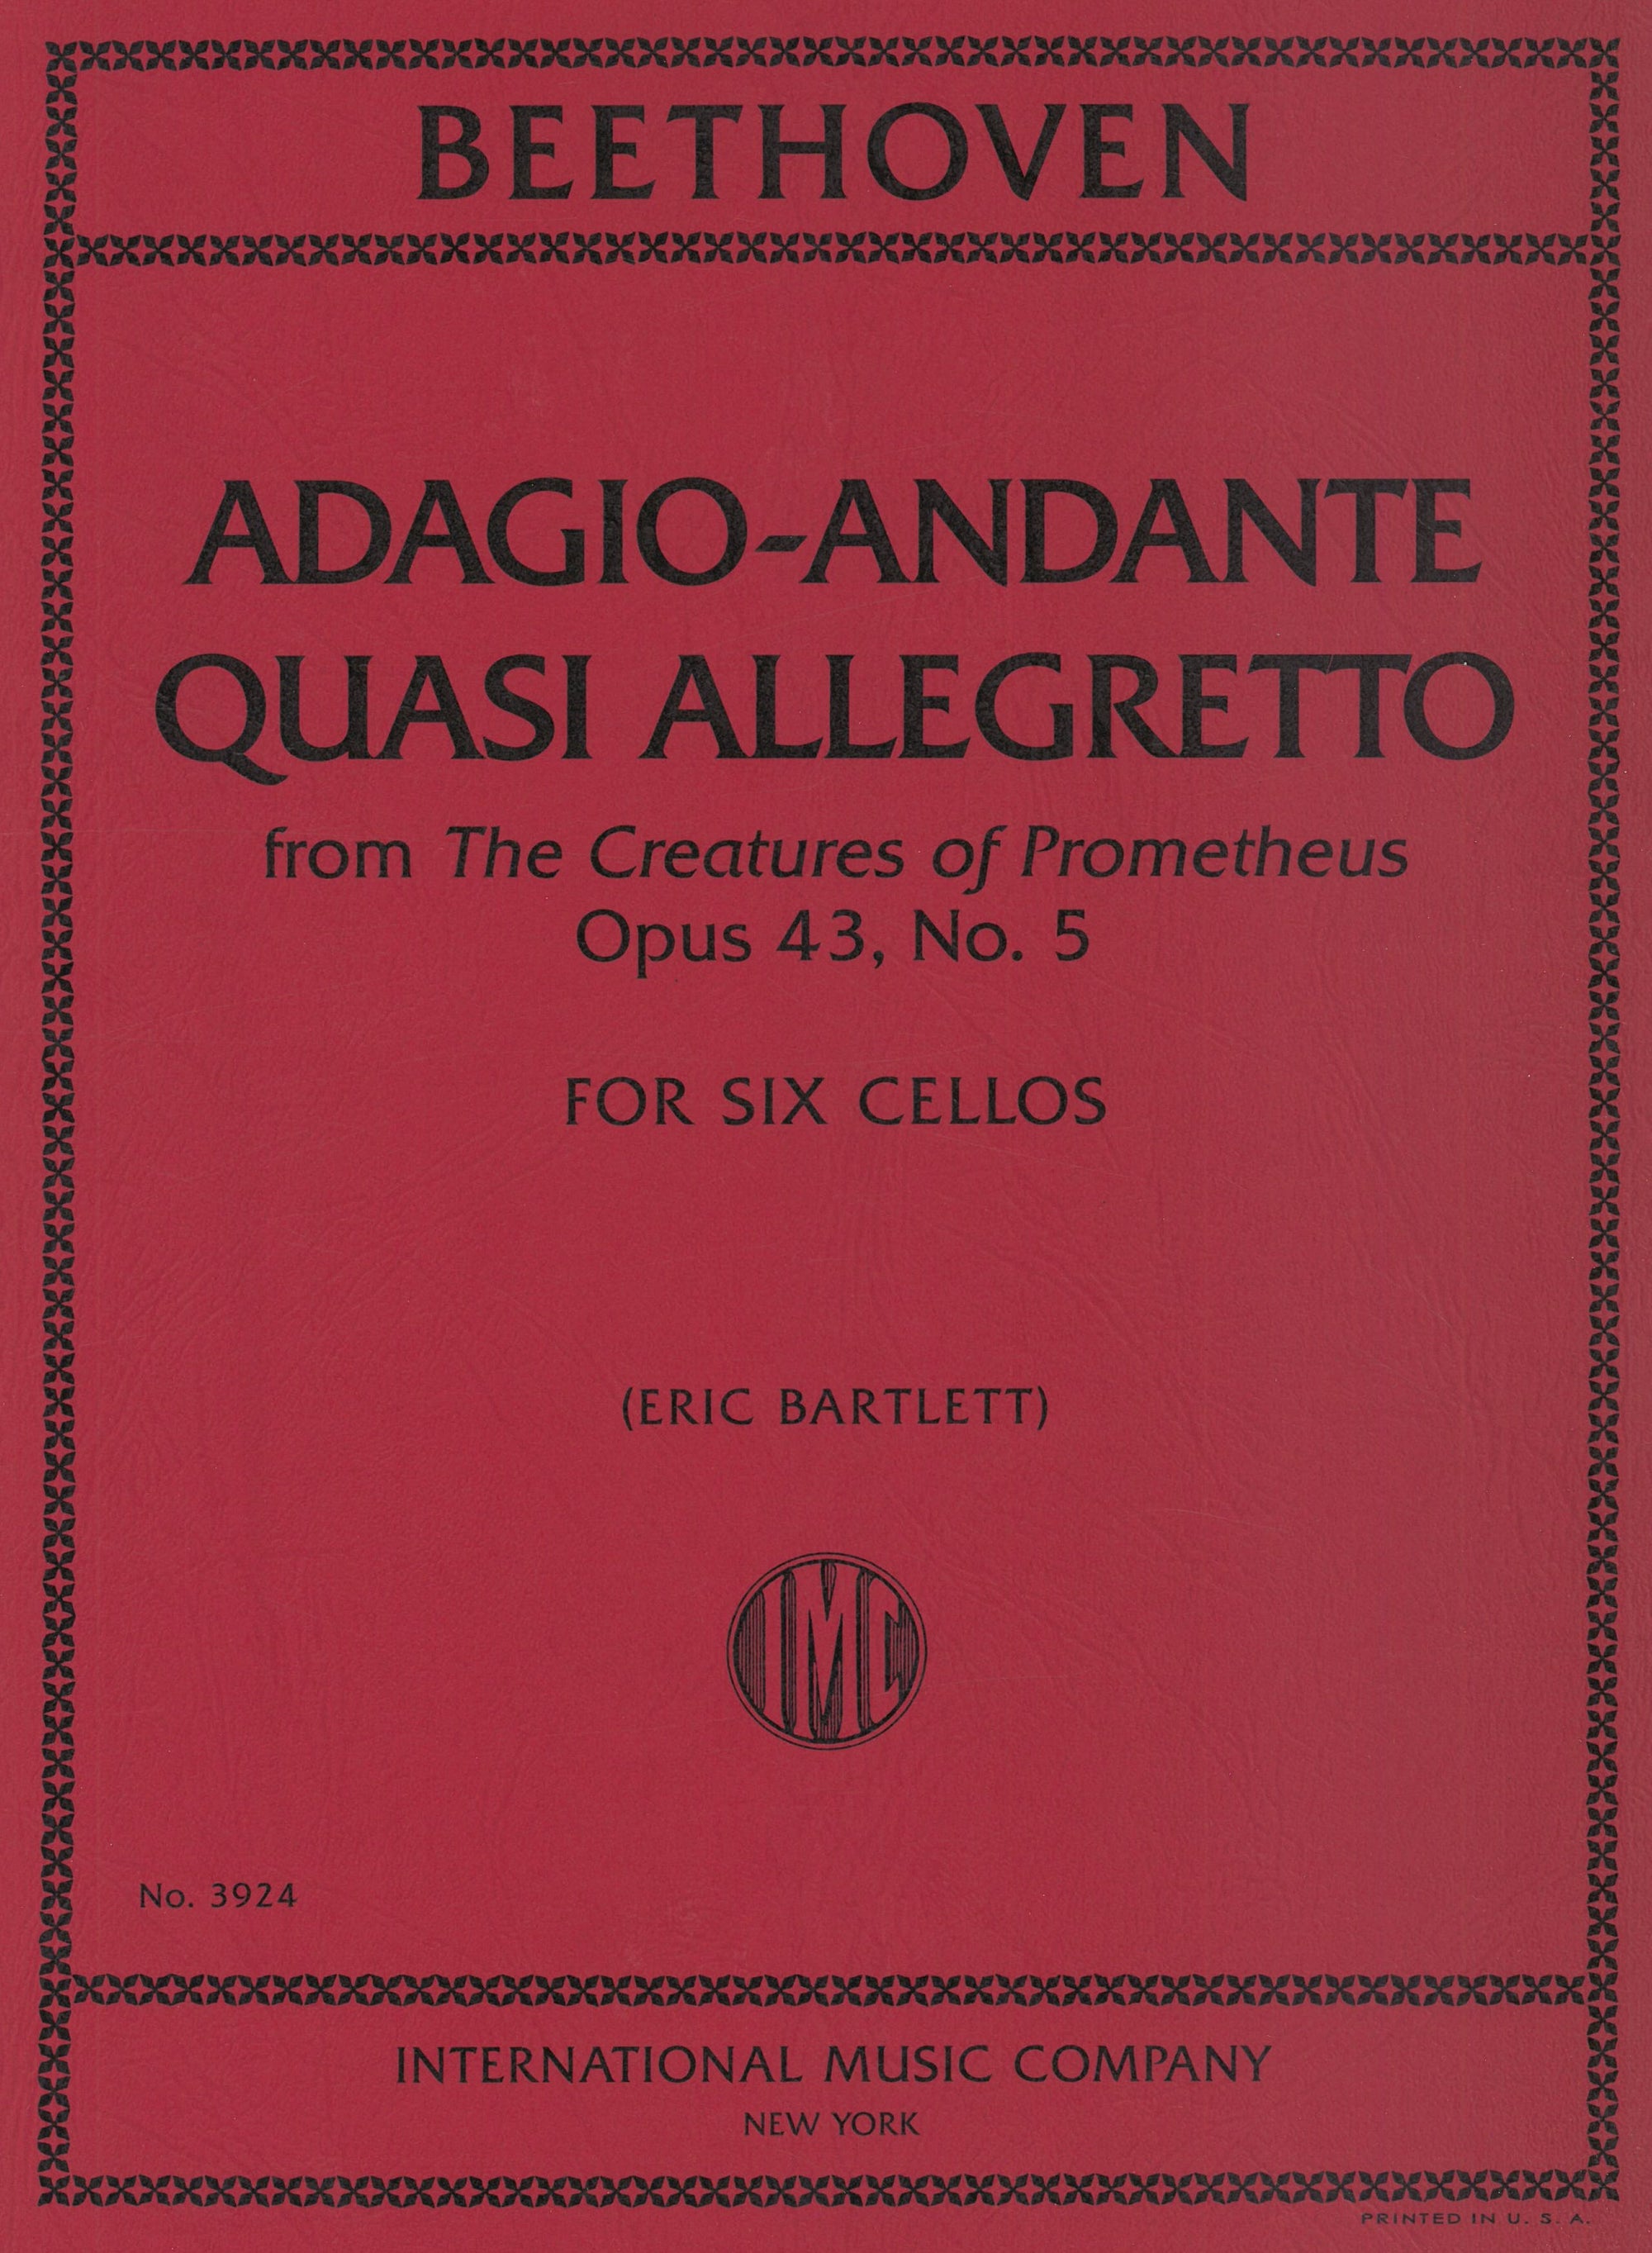 Beethoven: Adagio-Andante quasi allegretto from 'The Creatures of Prometheus, Op. 43, No. 5', (arr. for 6 cellos)